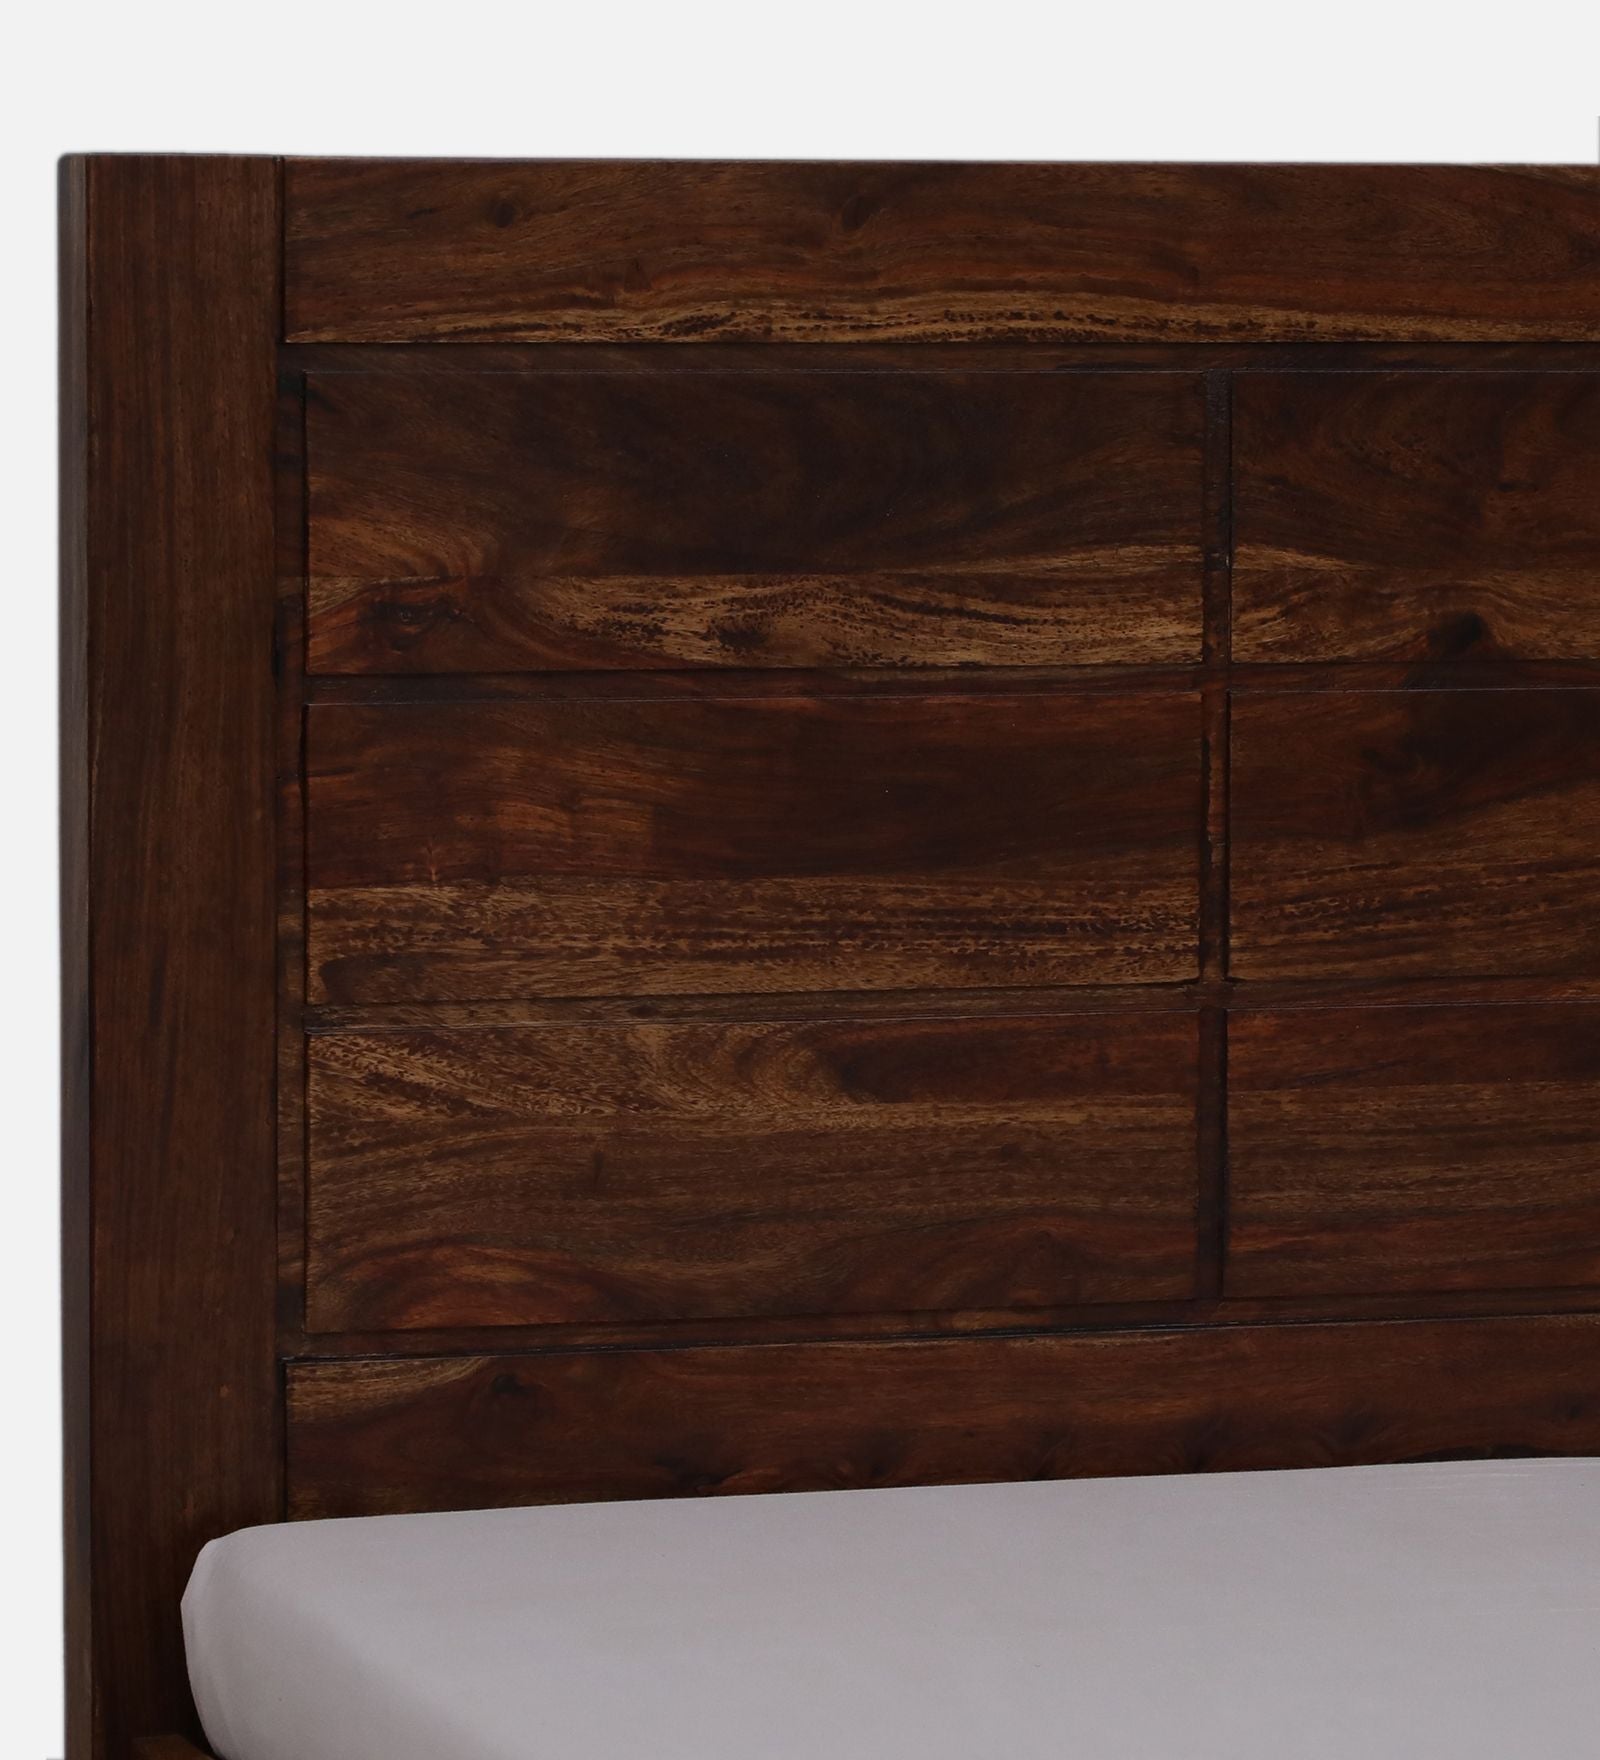 Moscow Solid Wood Single Bed In Provincial Teak Finish By Rajwada - Rajwada Furnish